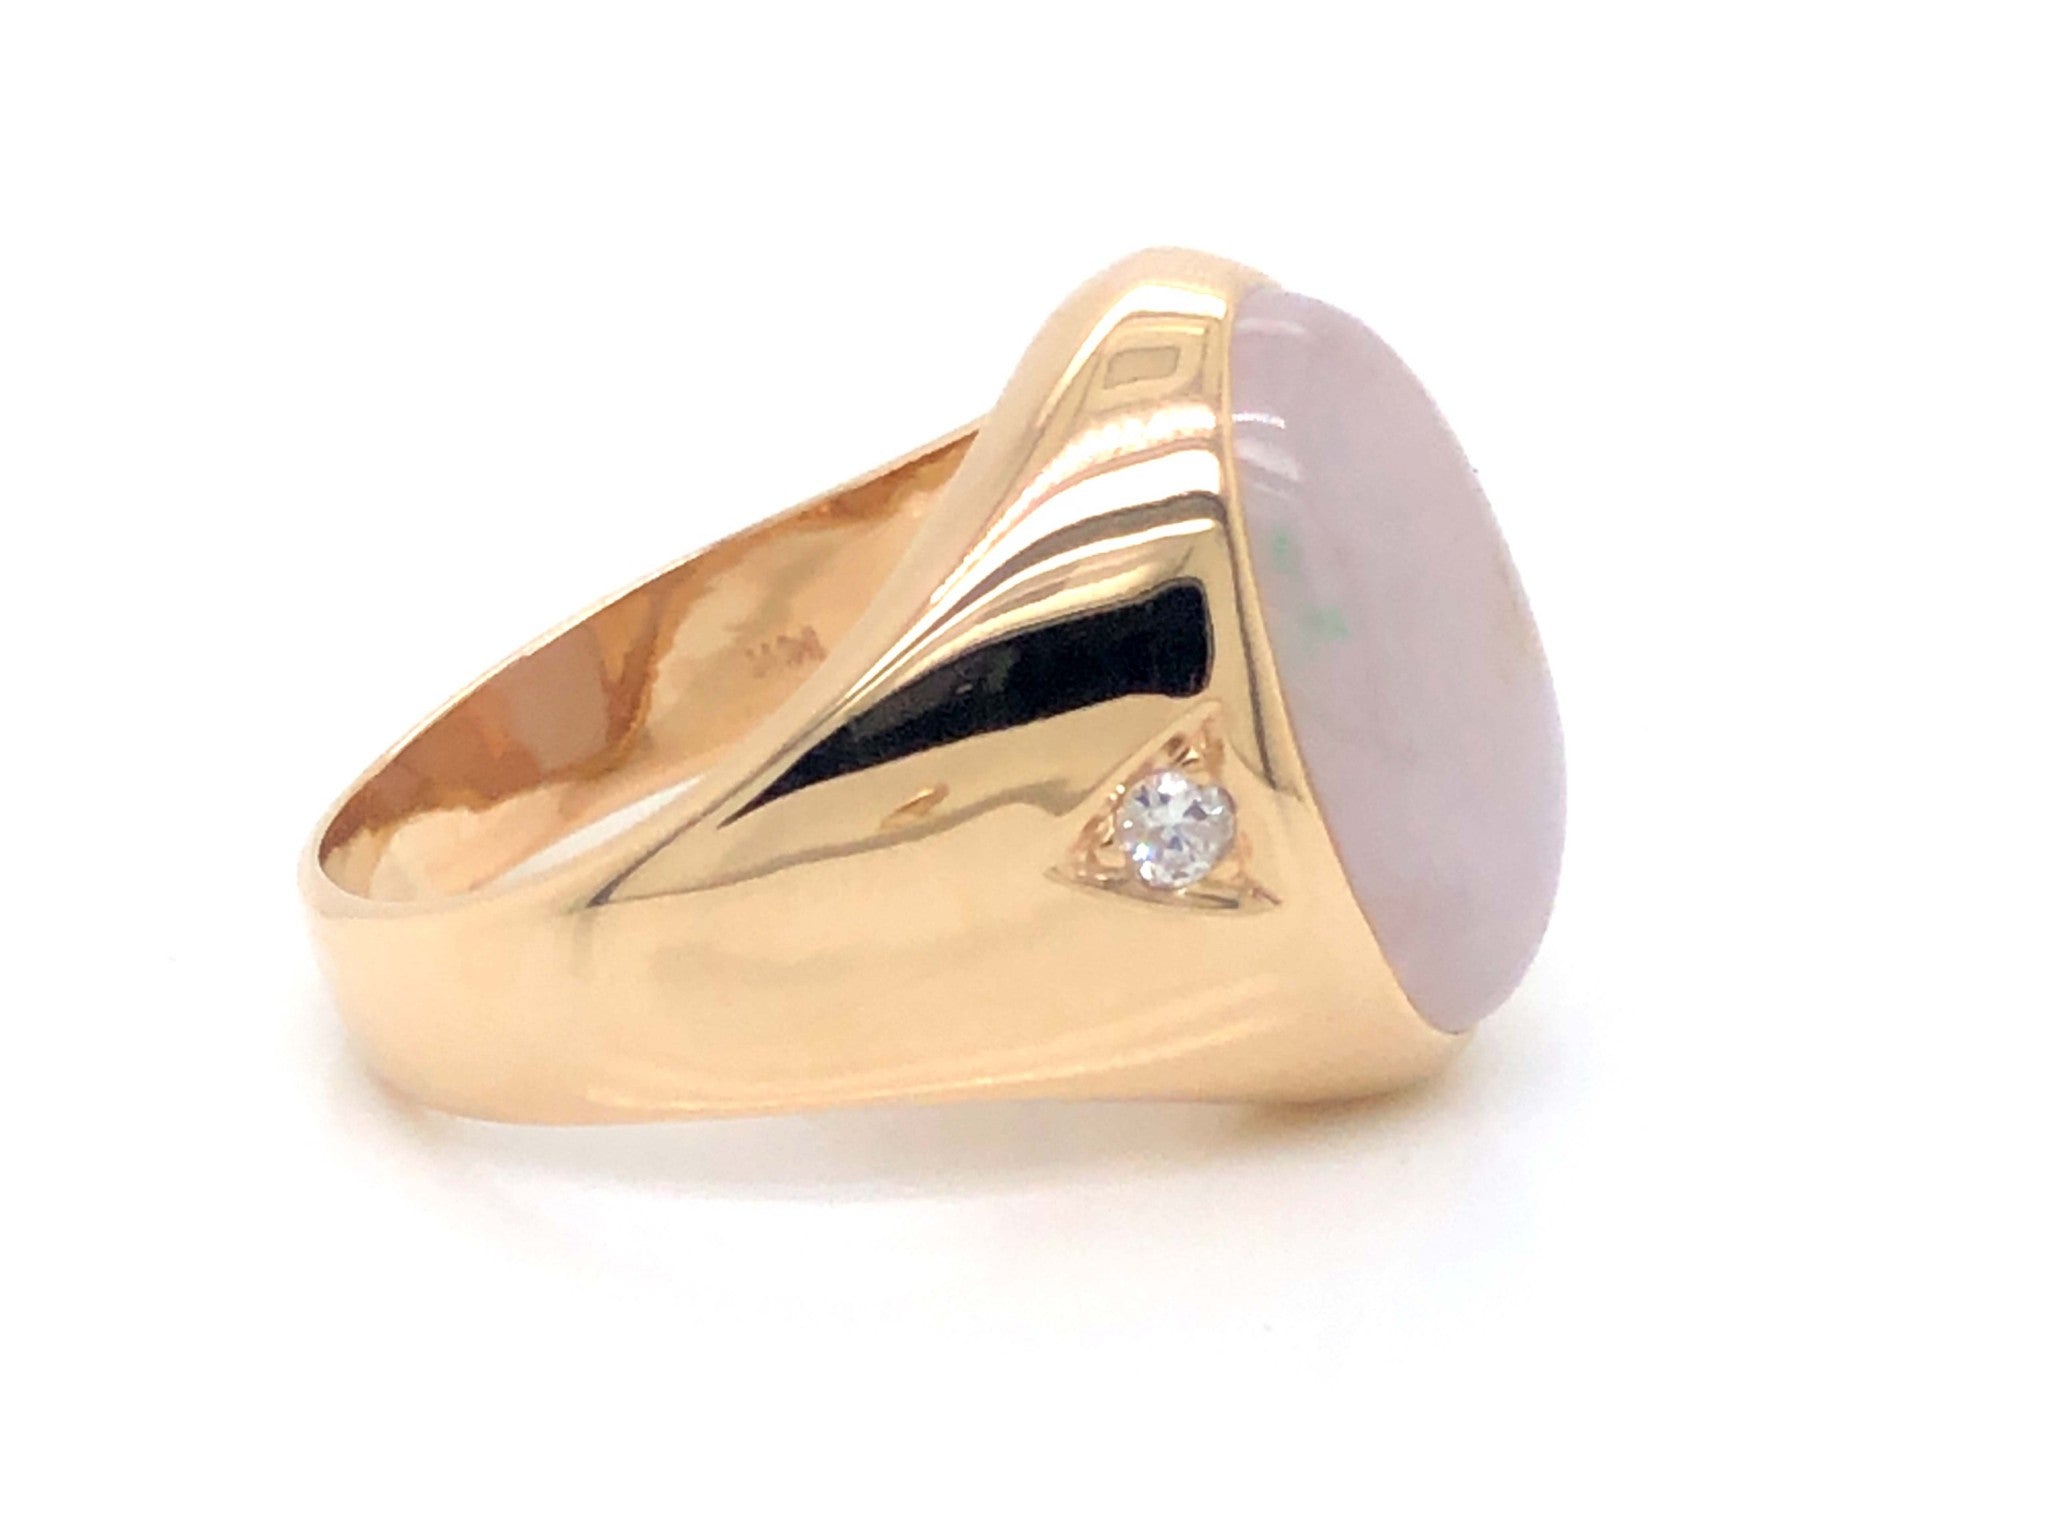 Men's Oval White Jade and Diamond Ring - 14k Yellow Gold